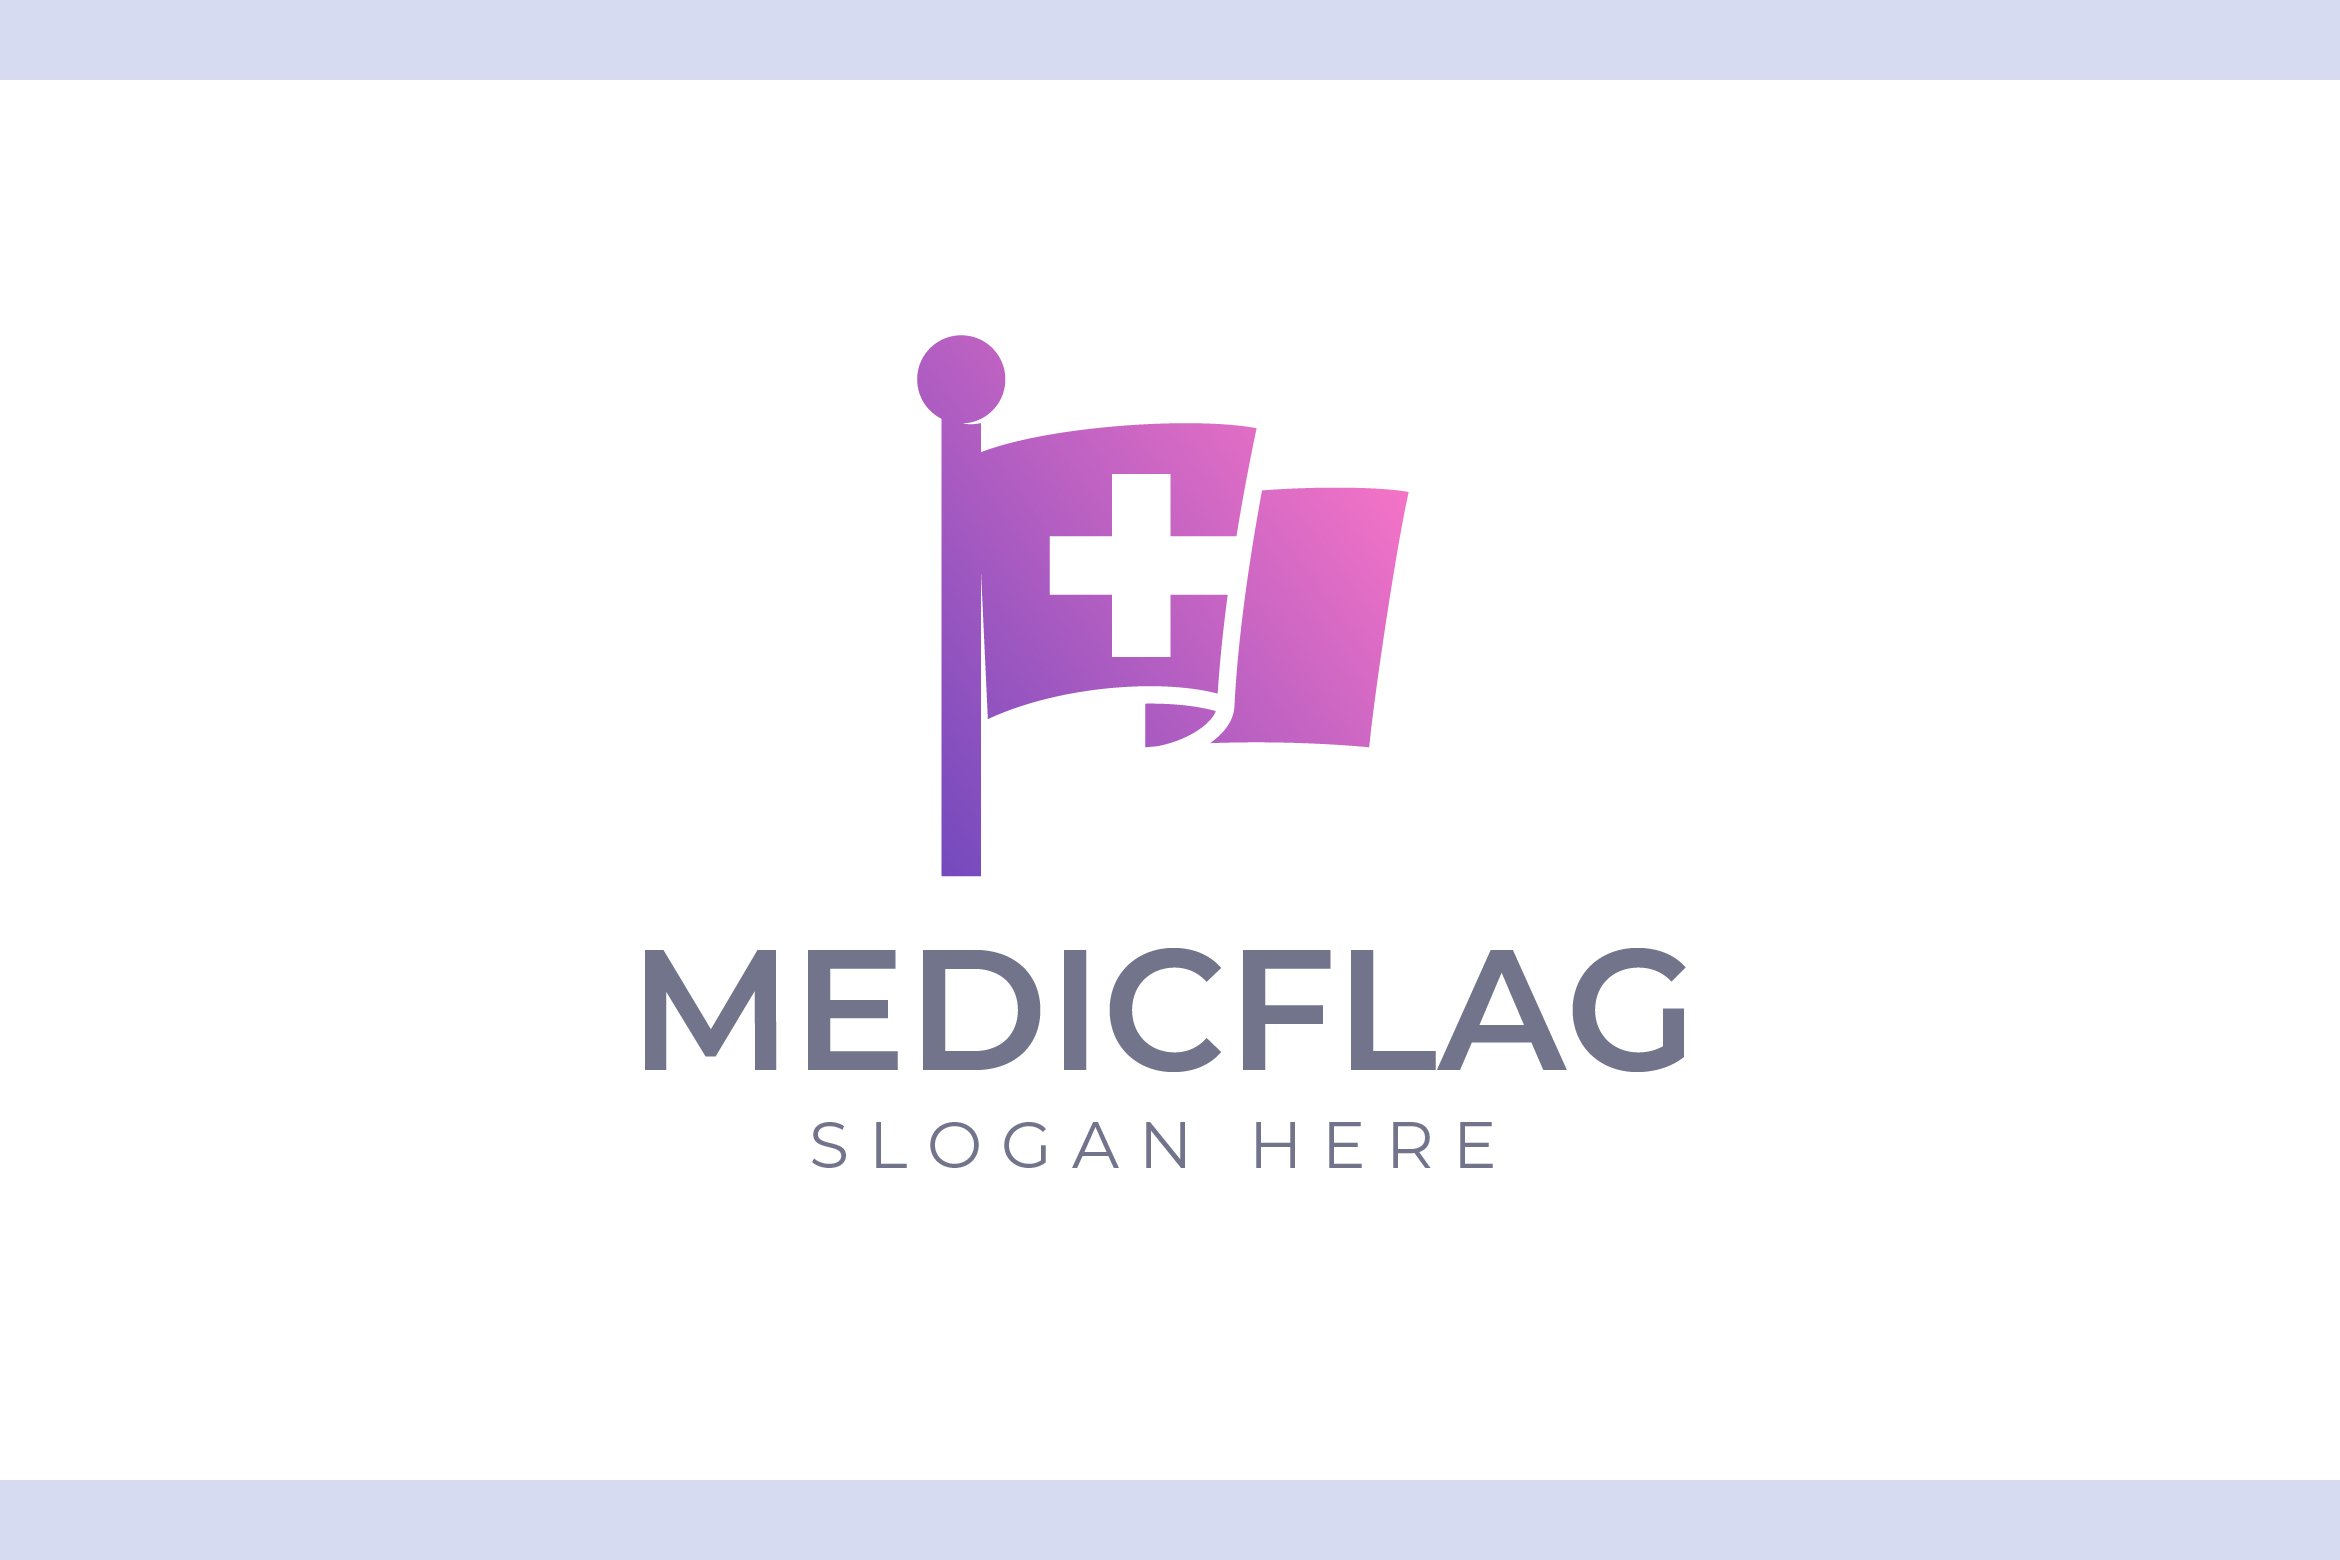 Medic Flag Logo cover image.